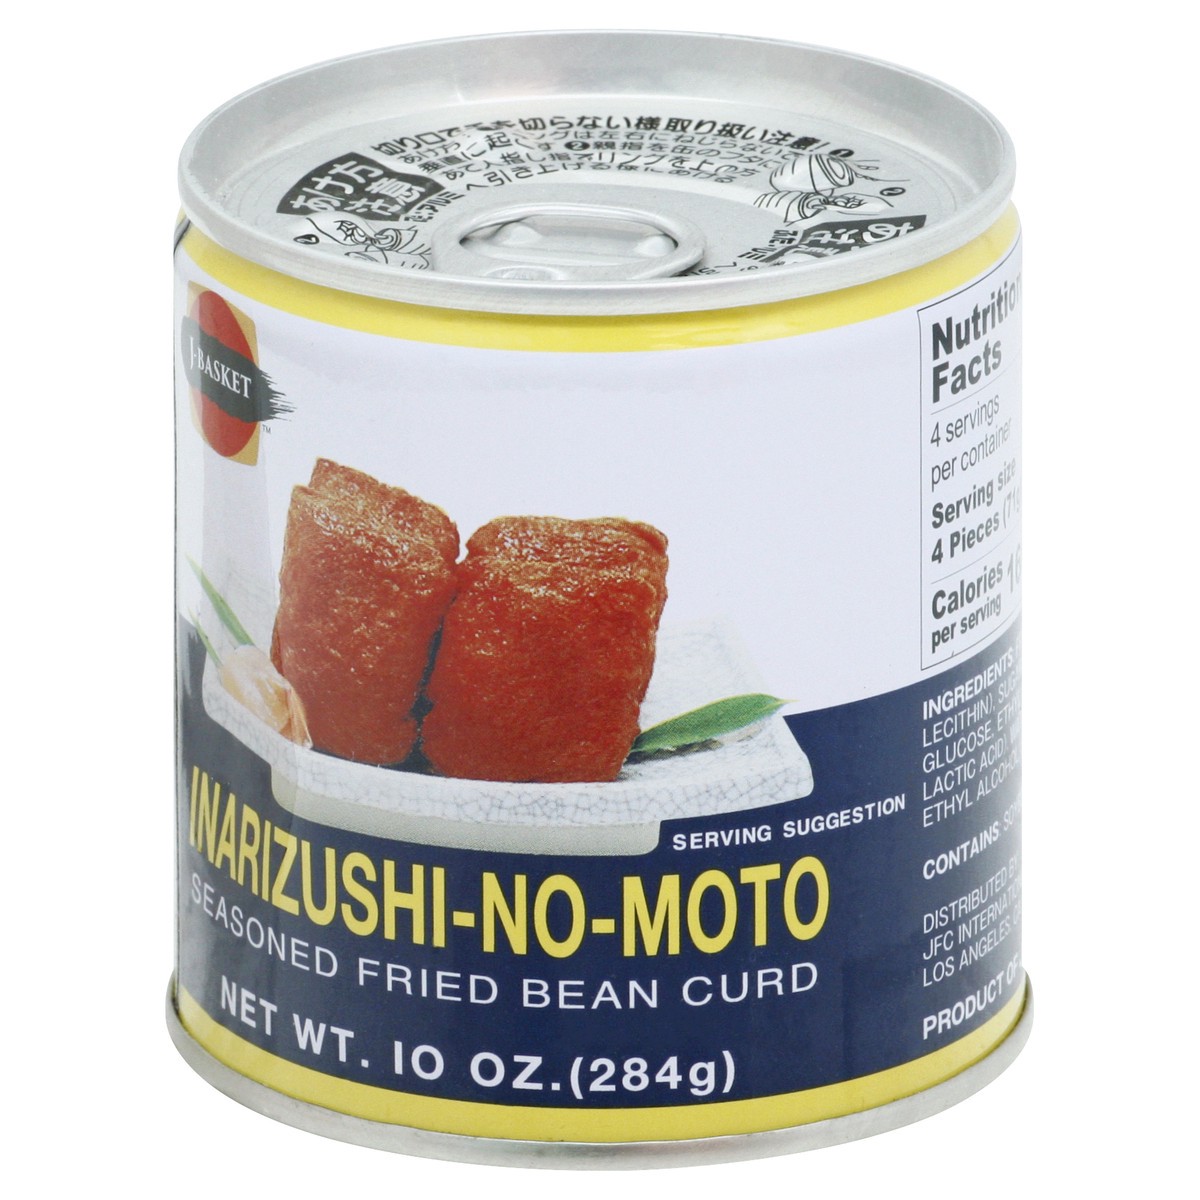 Hime Inarizushi-No-Moto 10 oz | Shipt